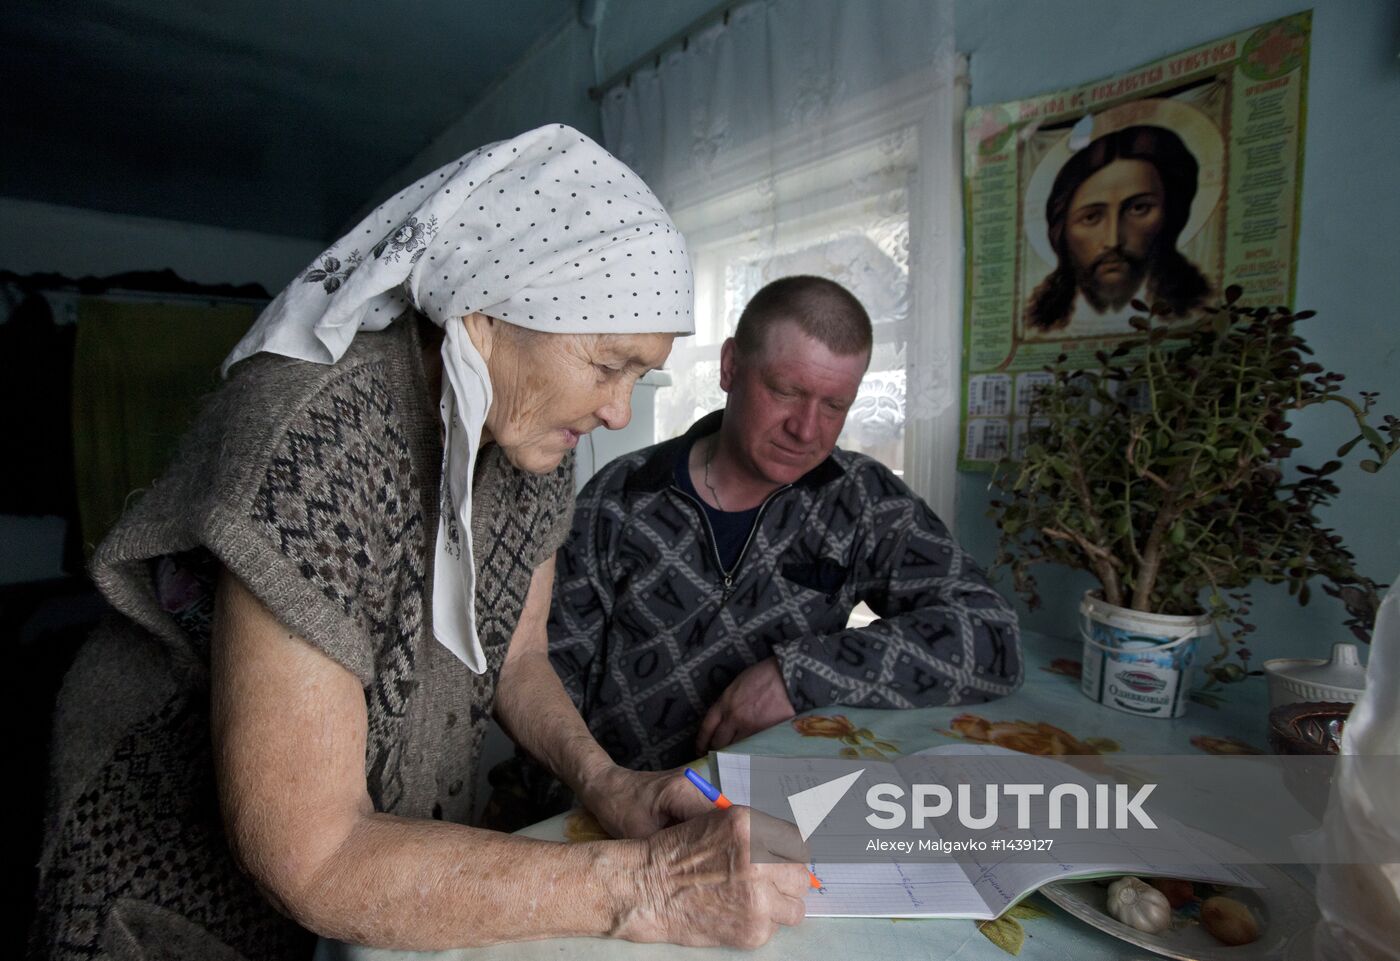 Work of social support service in Yekaterininskoye village